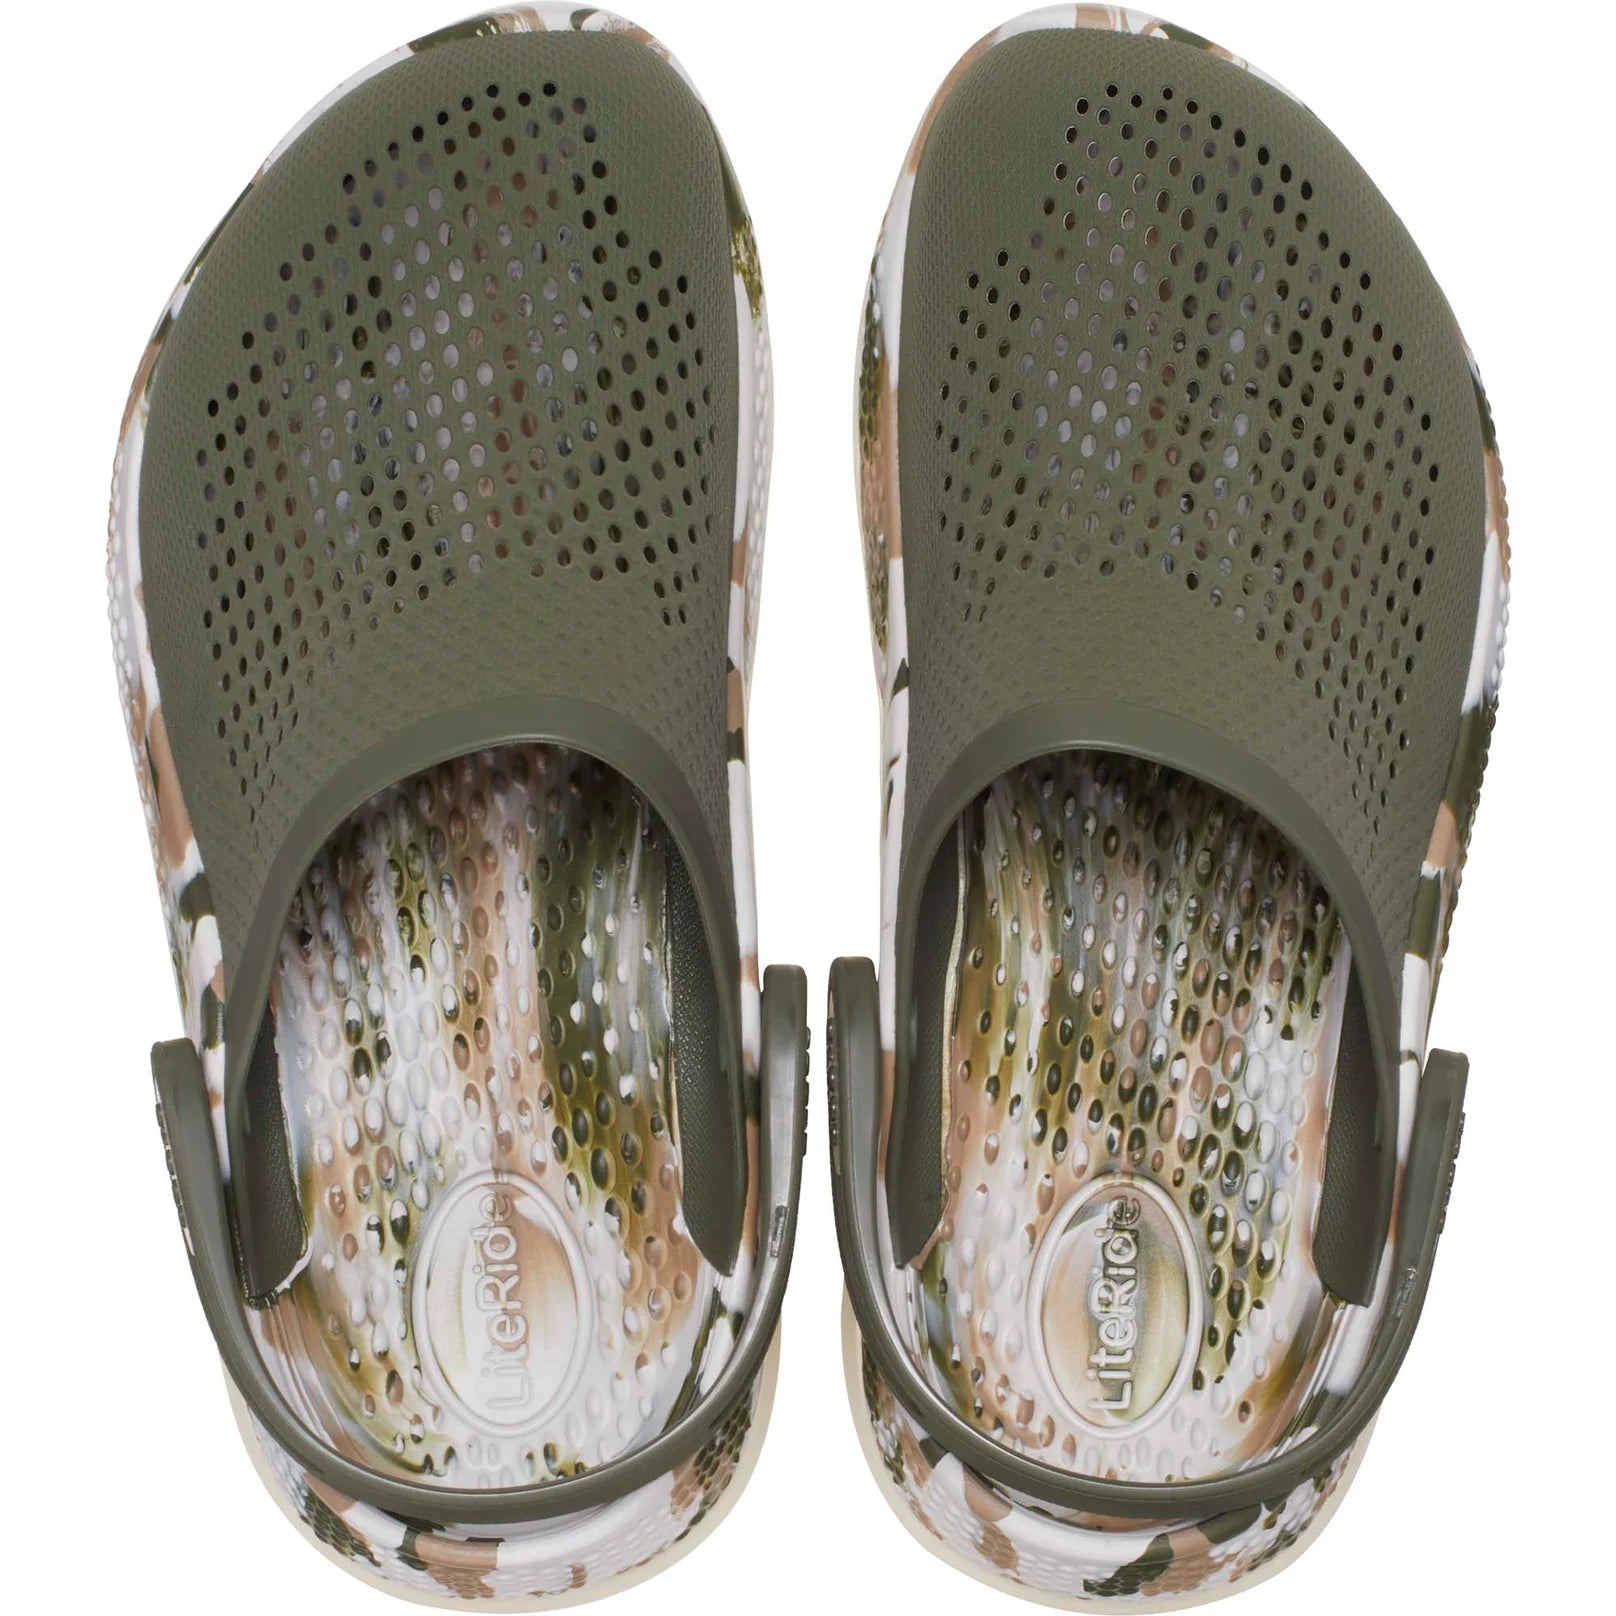 LiteRide 360 Marbled Clog - shoe&amp;me - Crocs - Clog - Clogs, Crocs, Mens, Womens